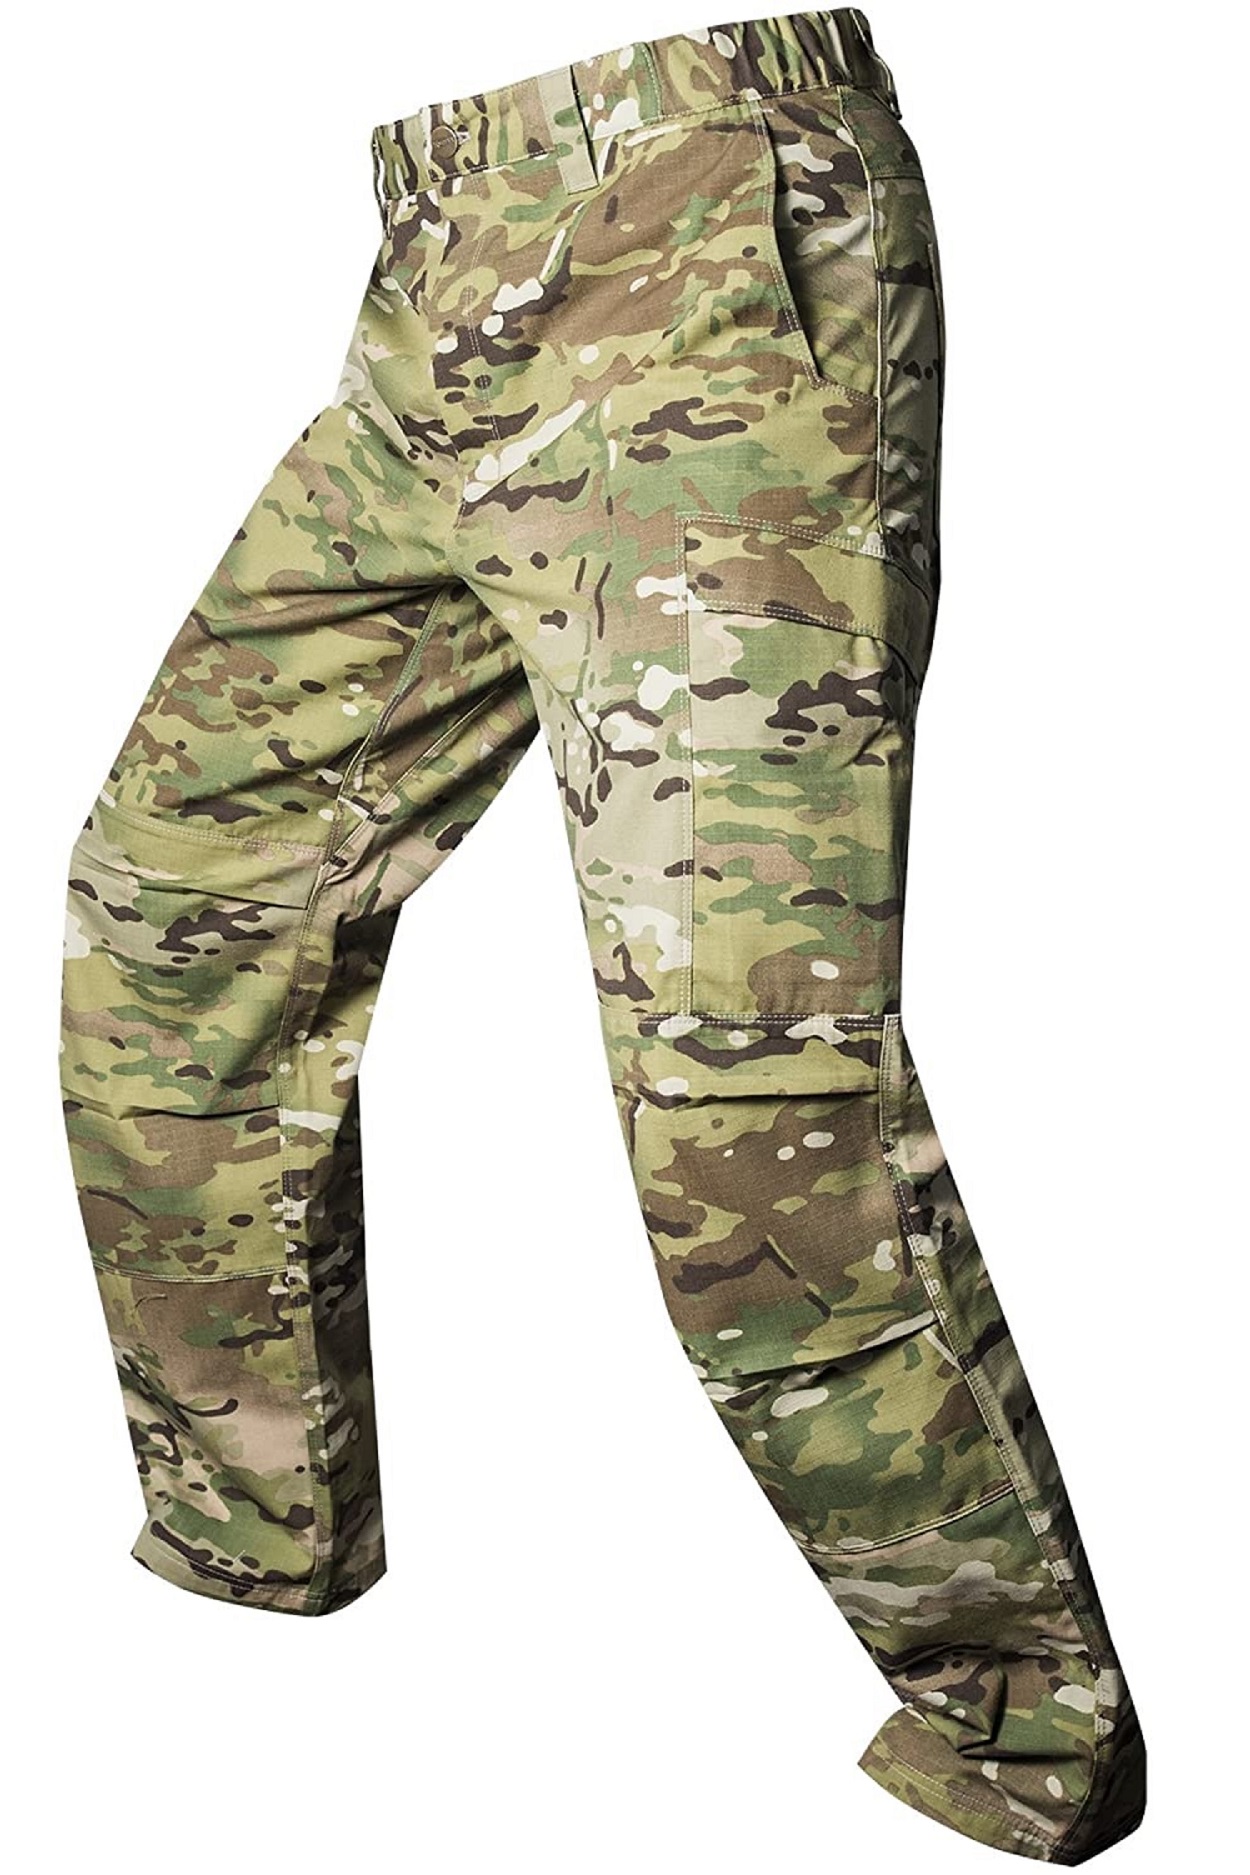 Vertx Phantom LT Men's Tactical Pants